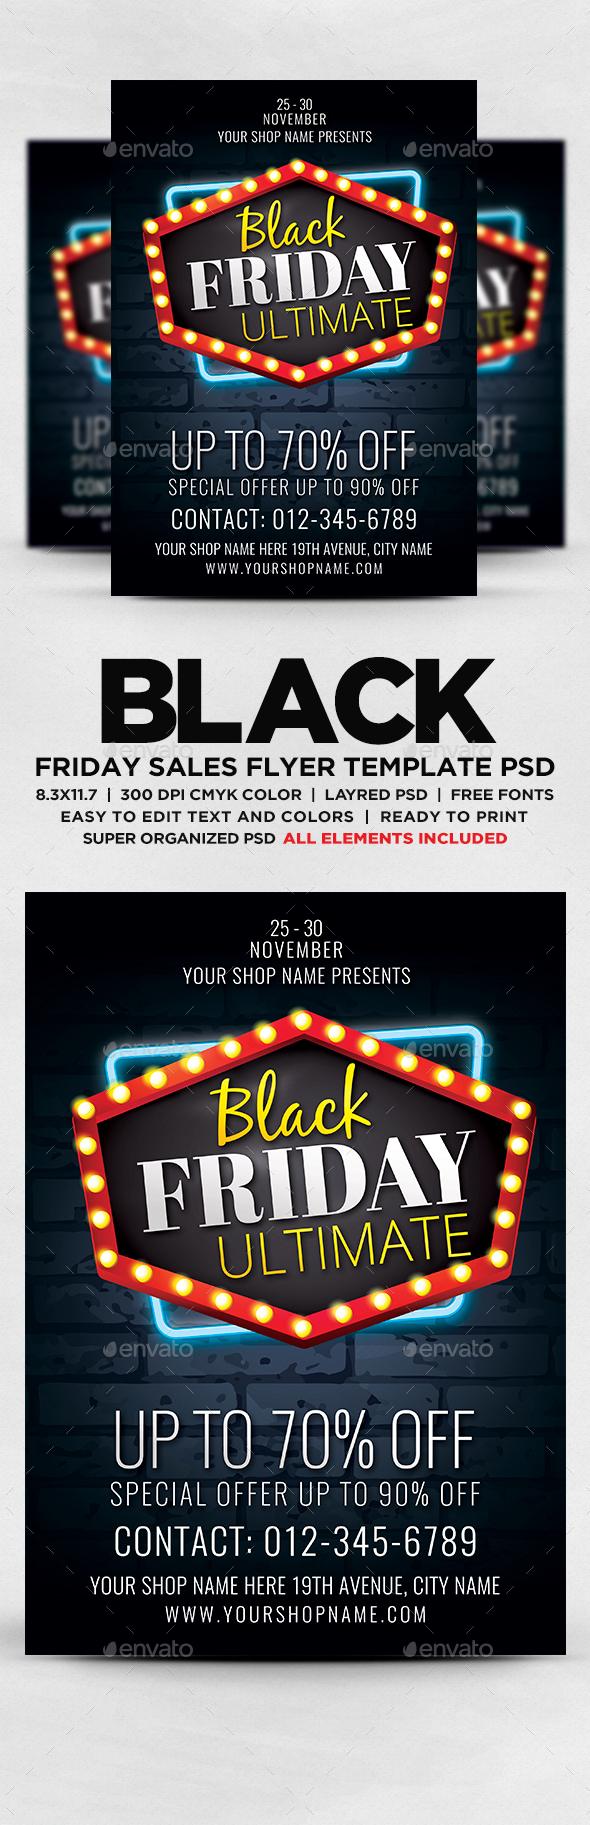 Black Friday Ultimate Flyer